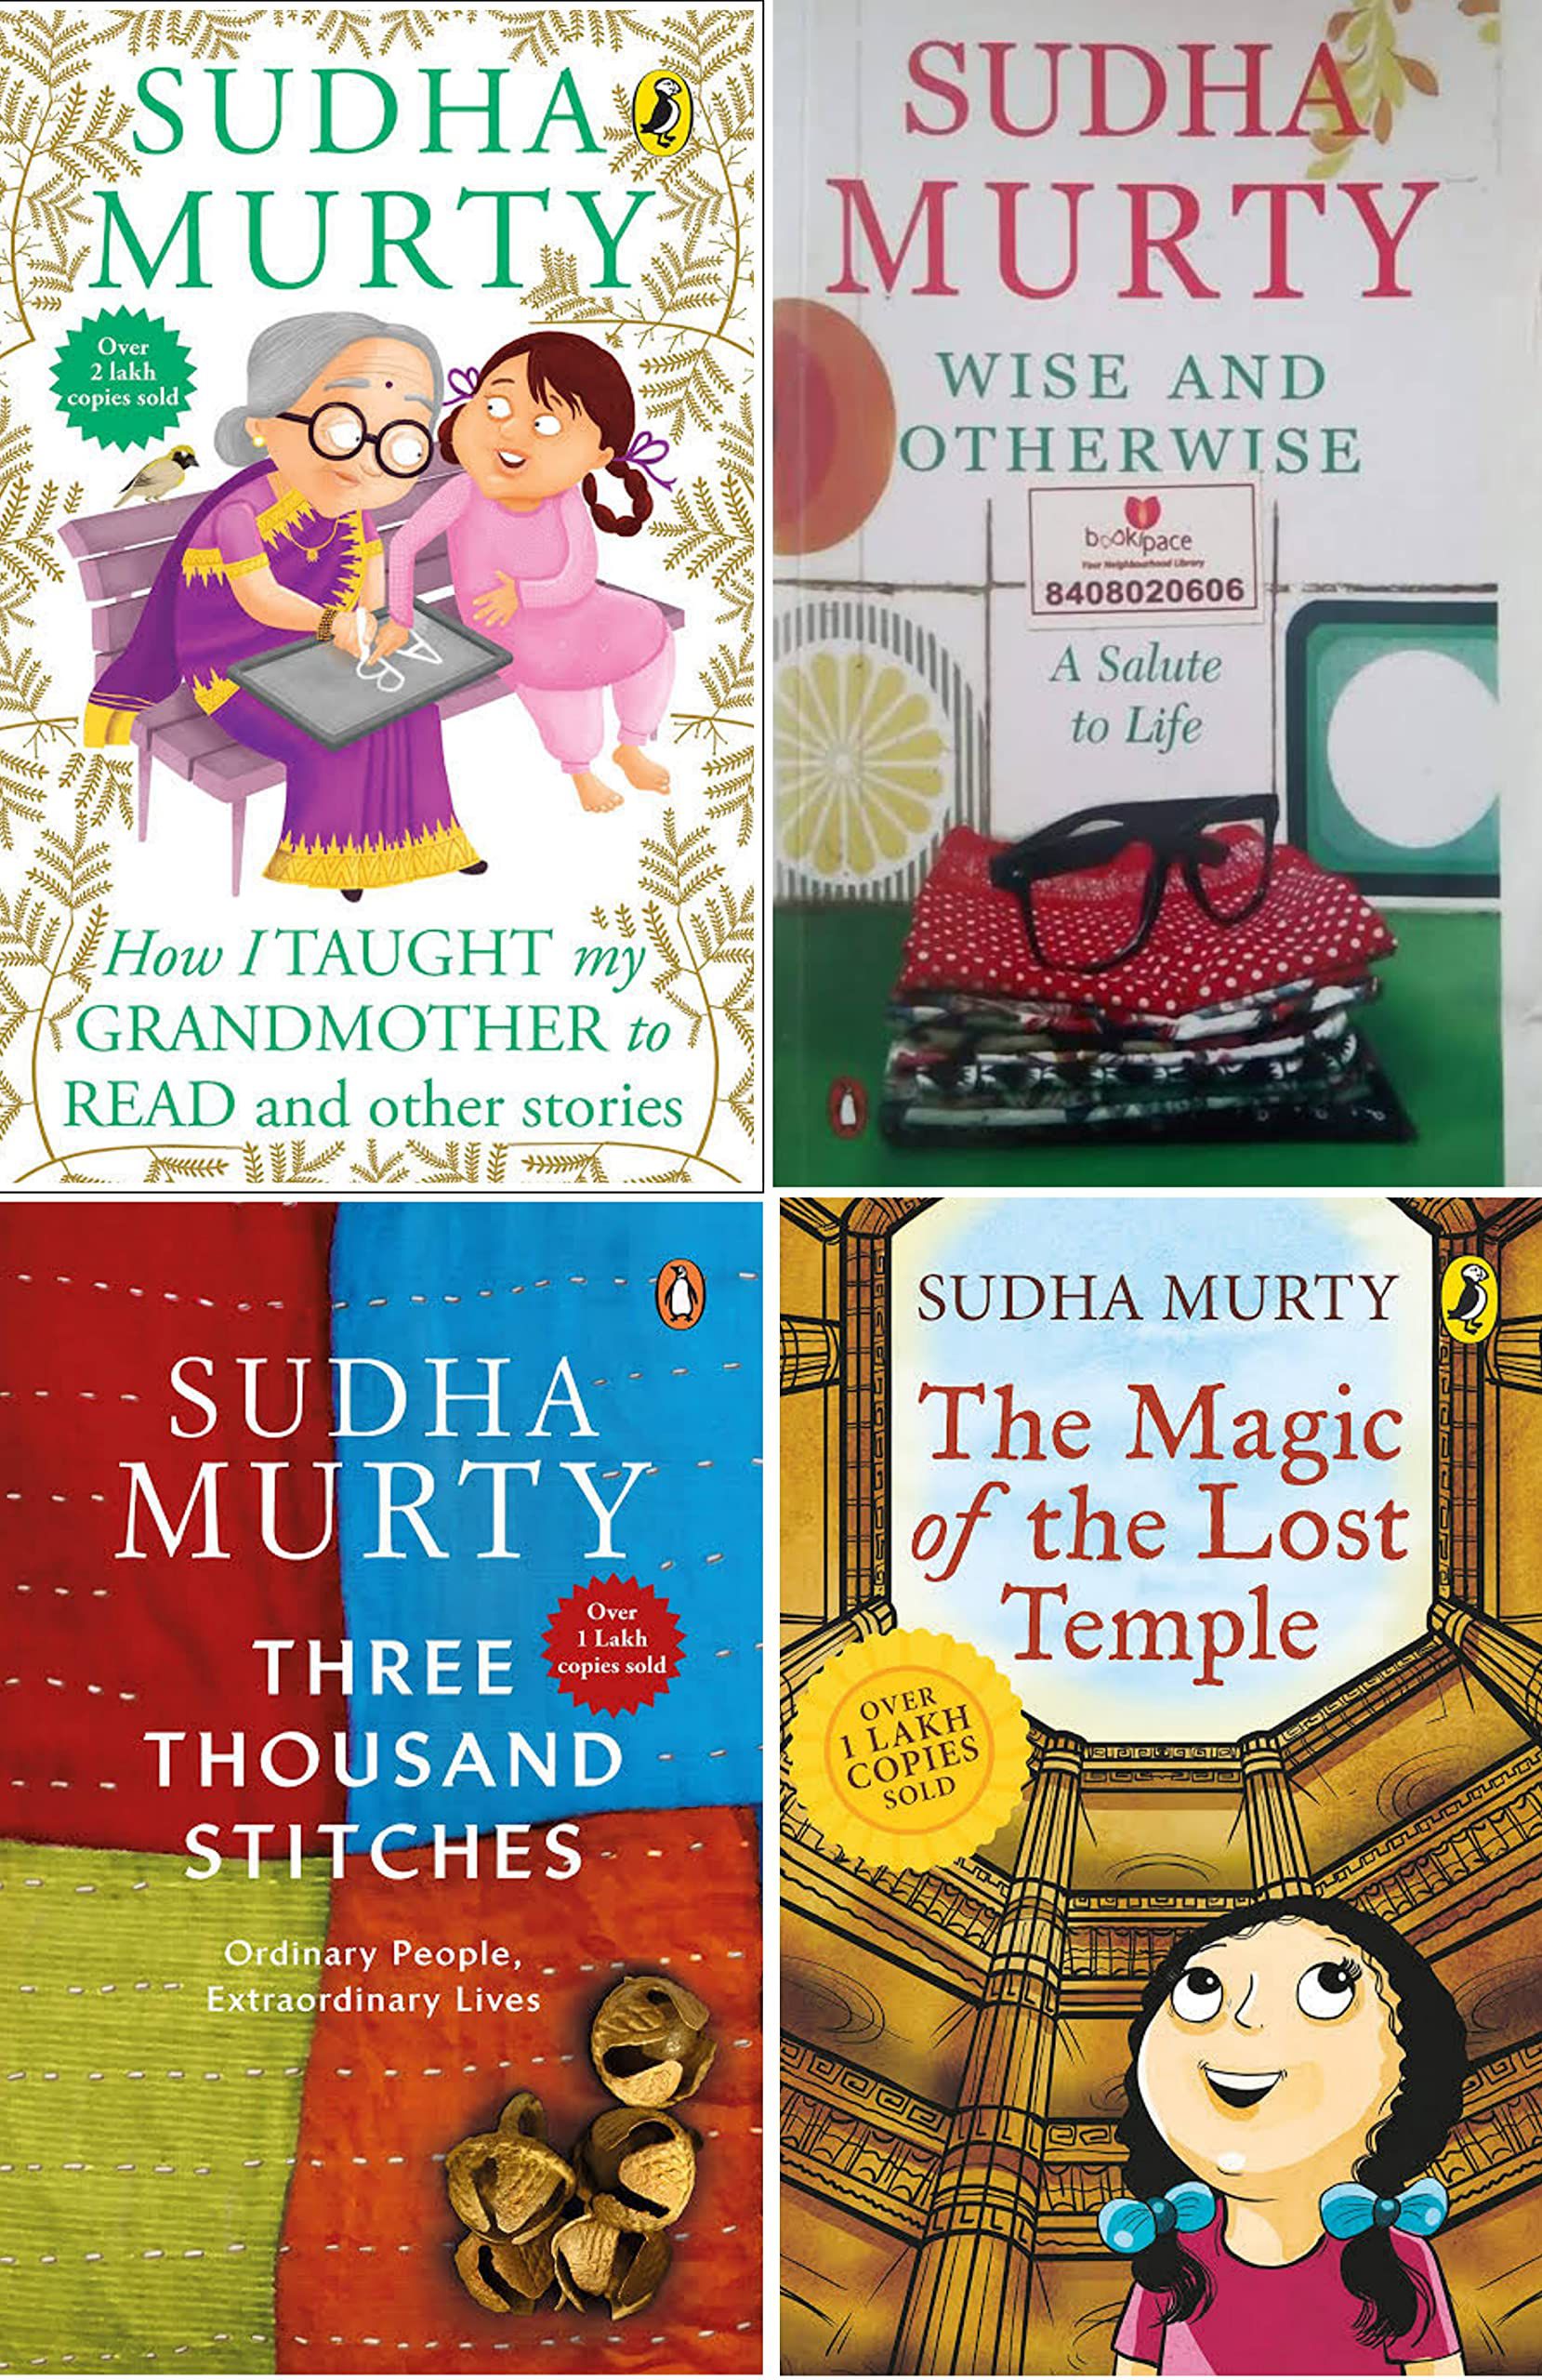 sudha murthy books free online read